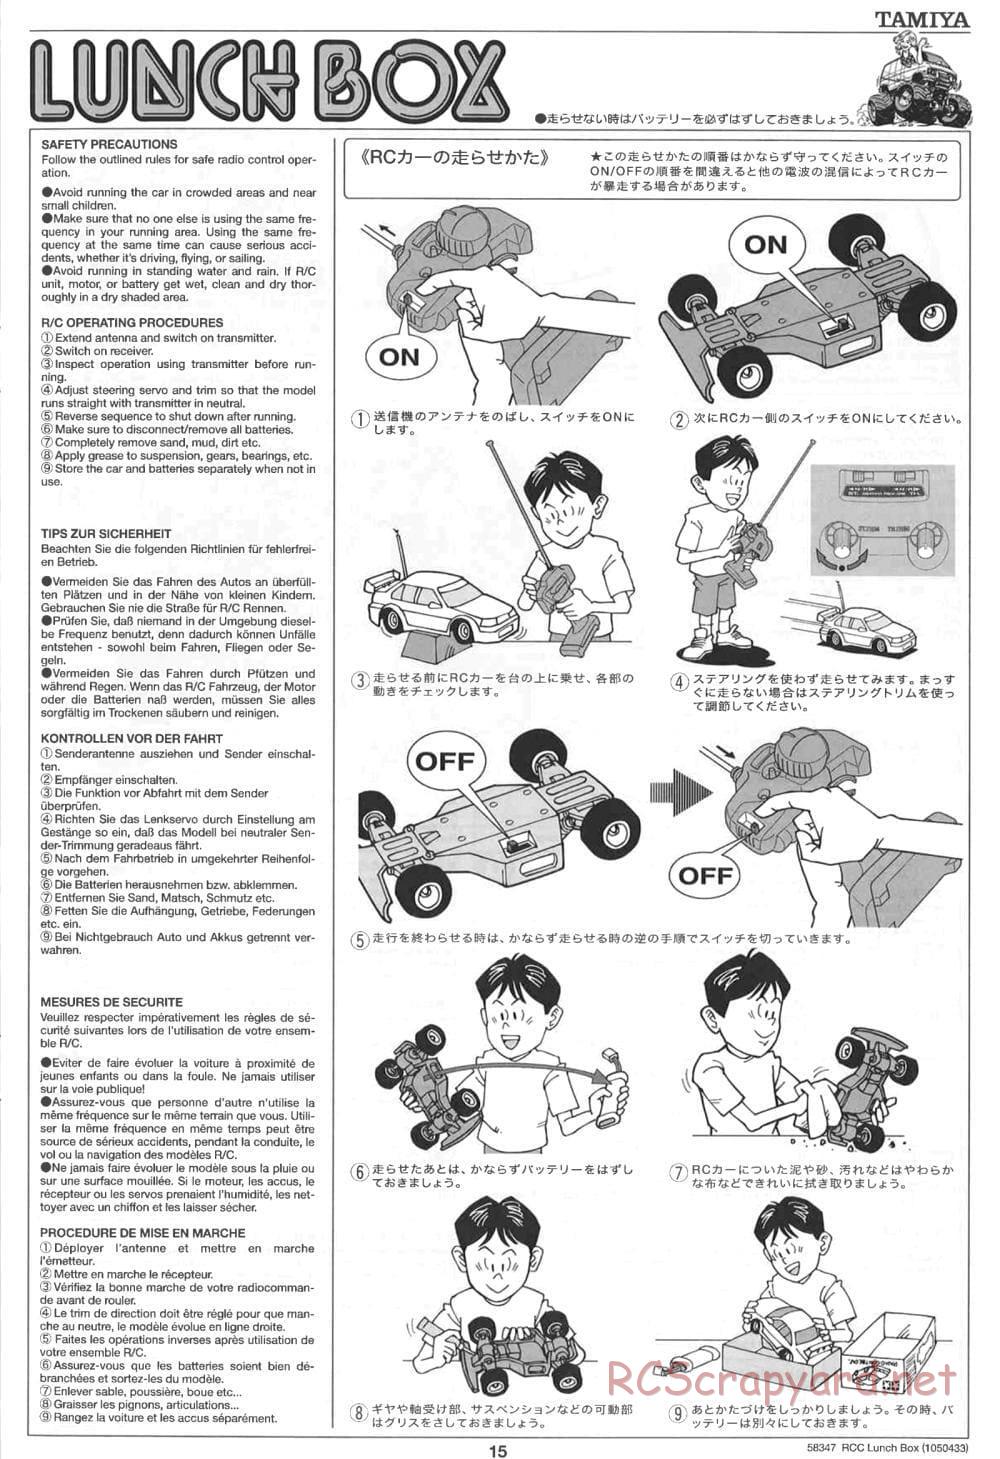 Tamiya - Vanessas Lunchbox - CW-01 Chassis - Manual - Page 15